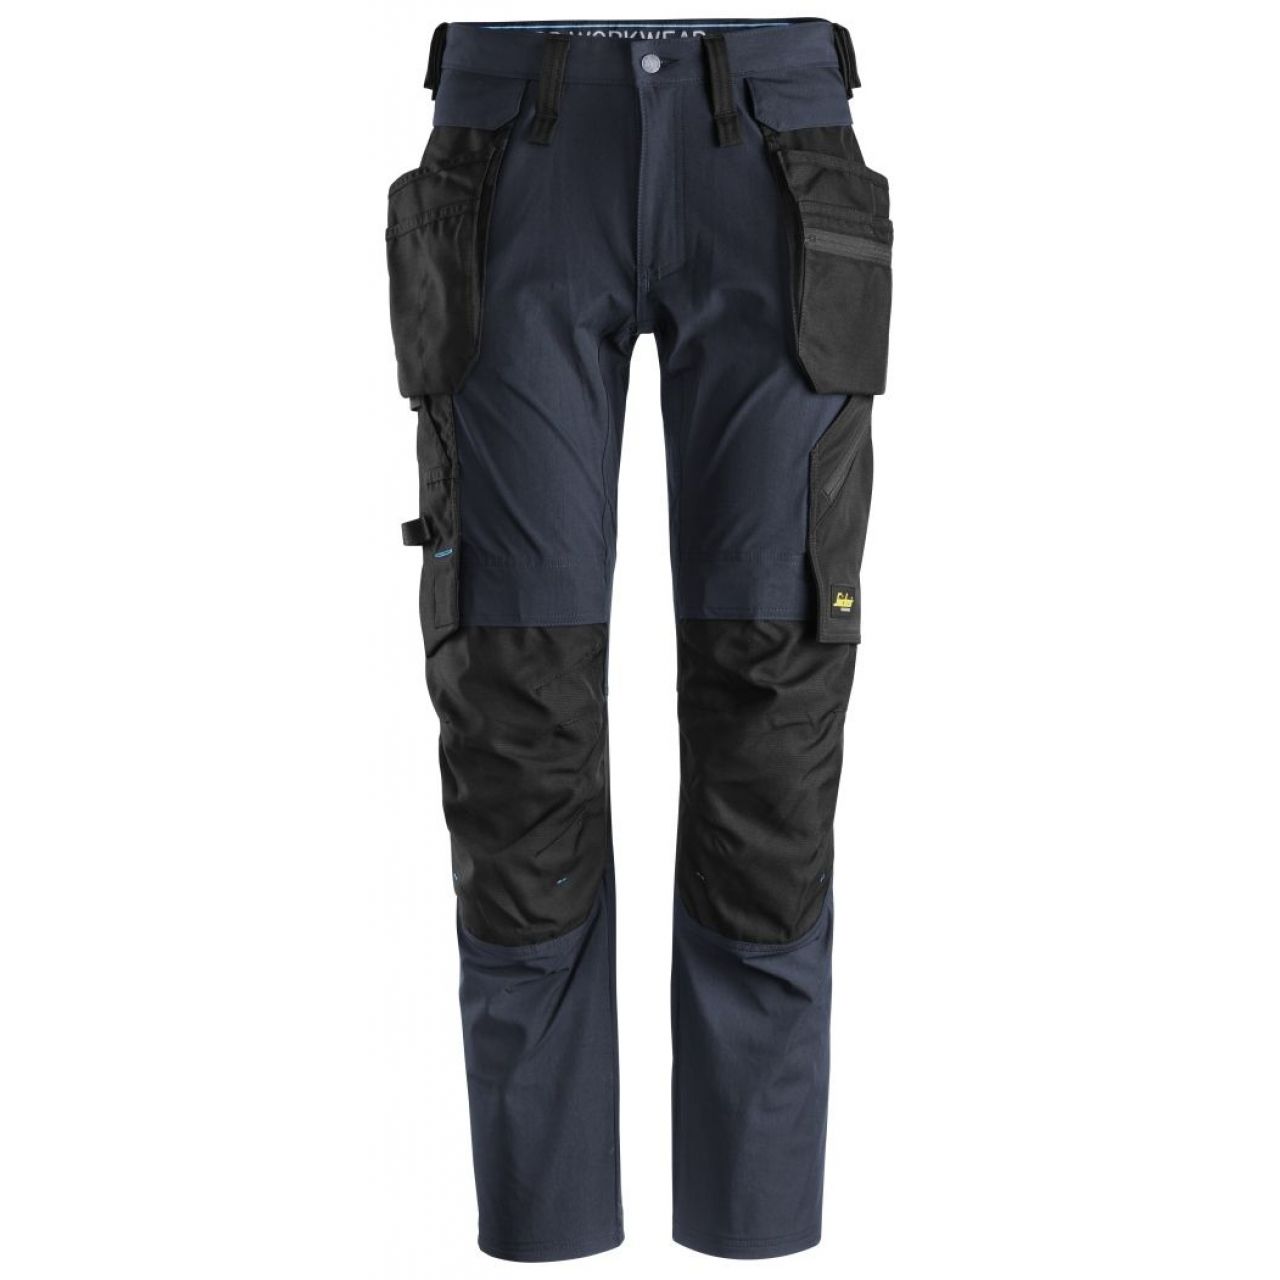 Pantalon + bolsillos flotantes desmontables LiteWork azul marino-negro talla 154